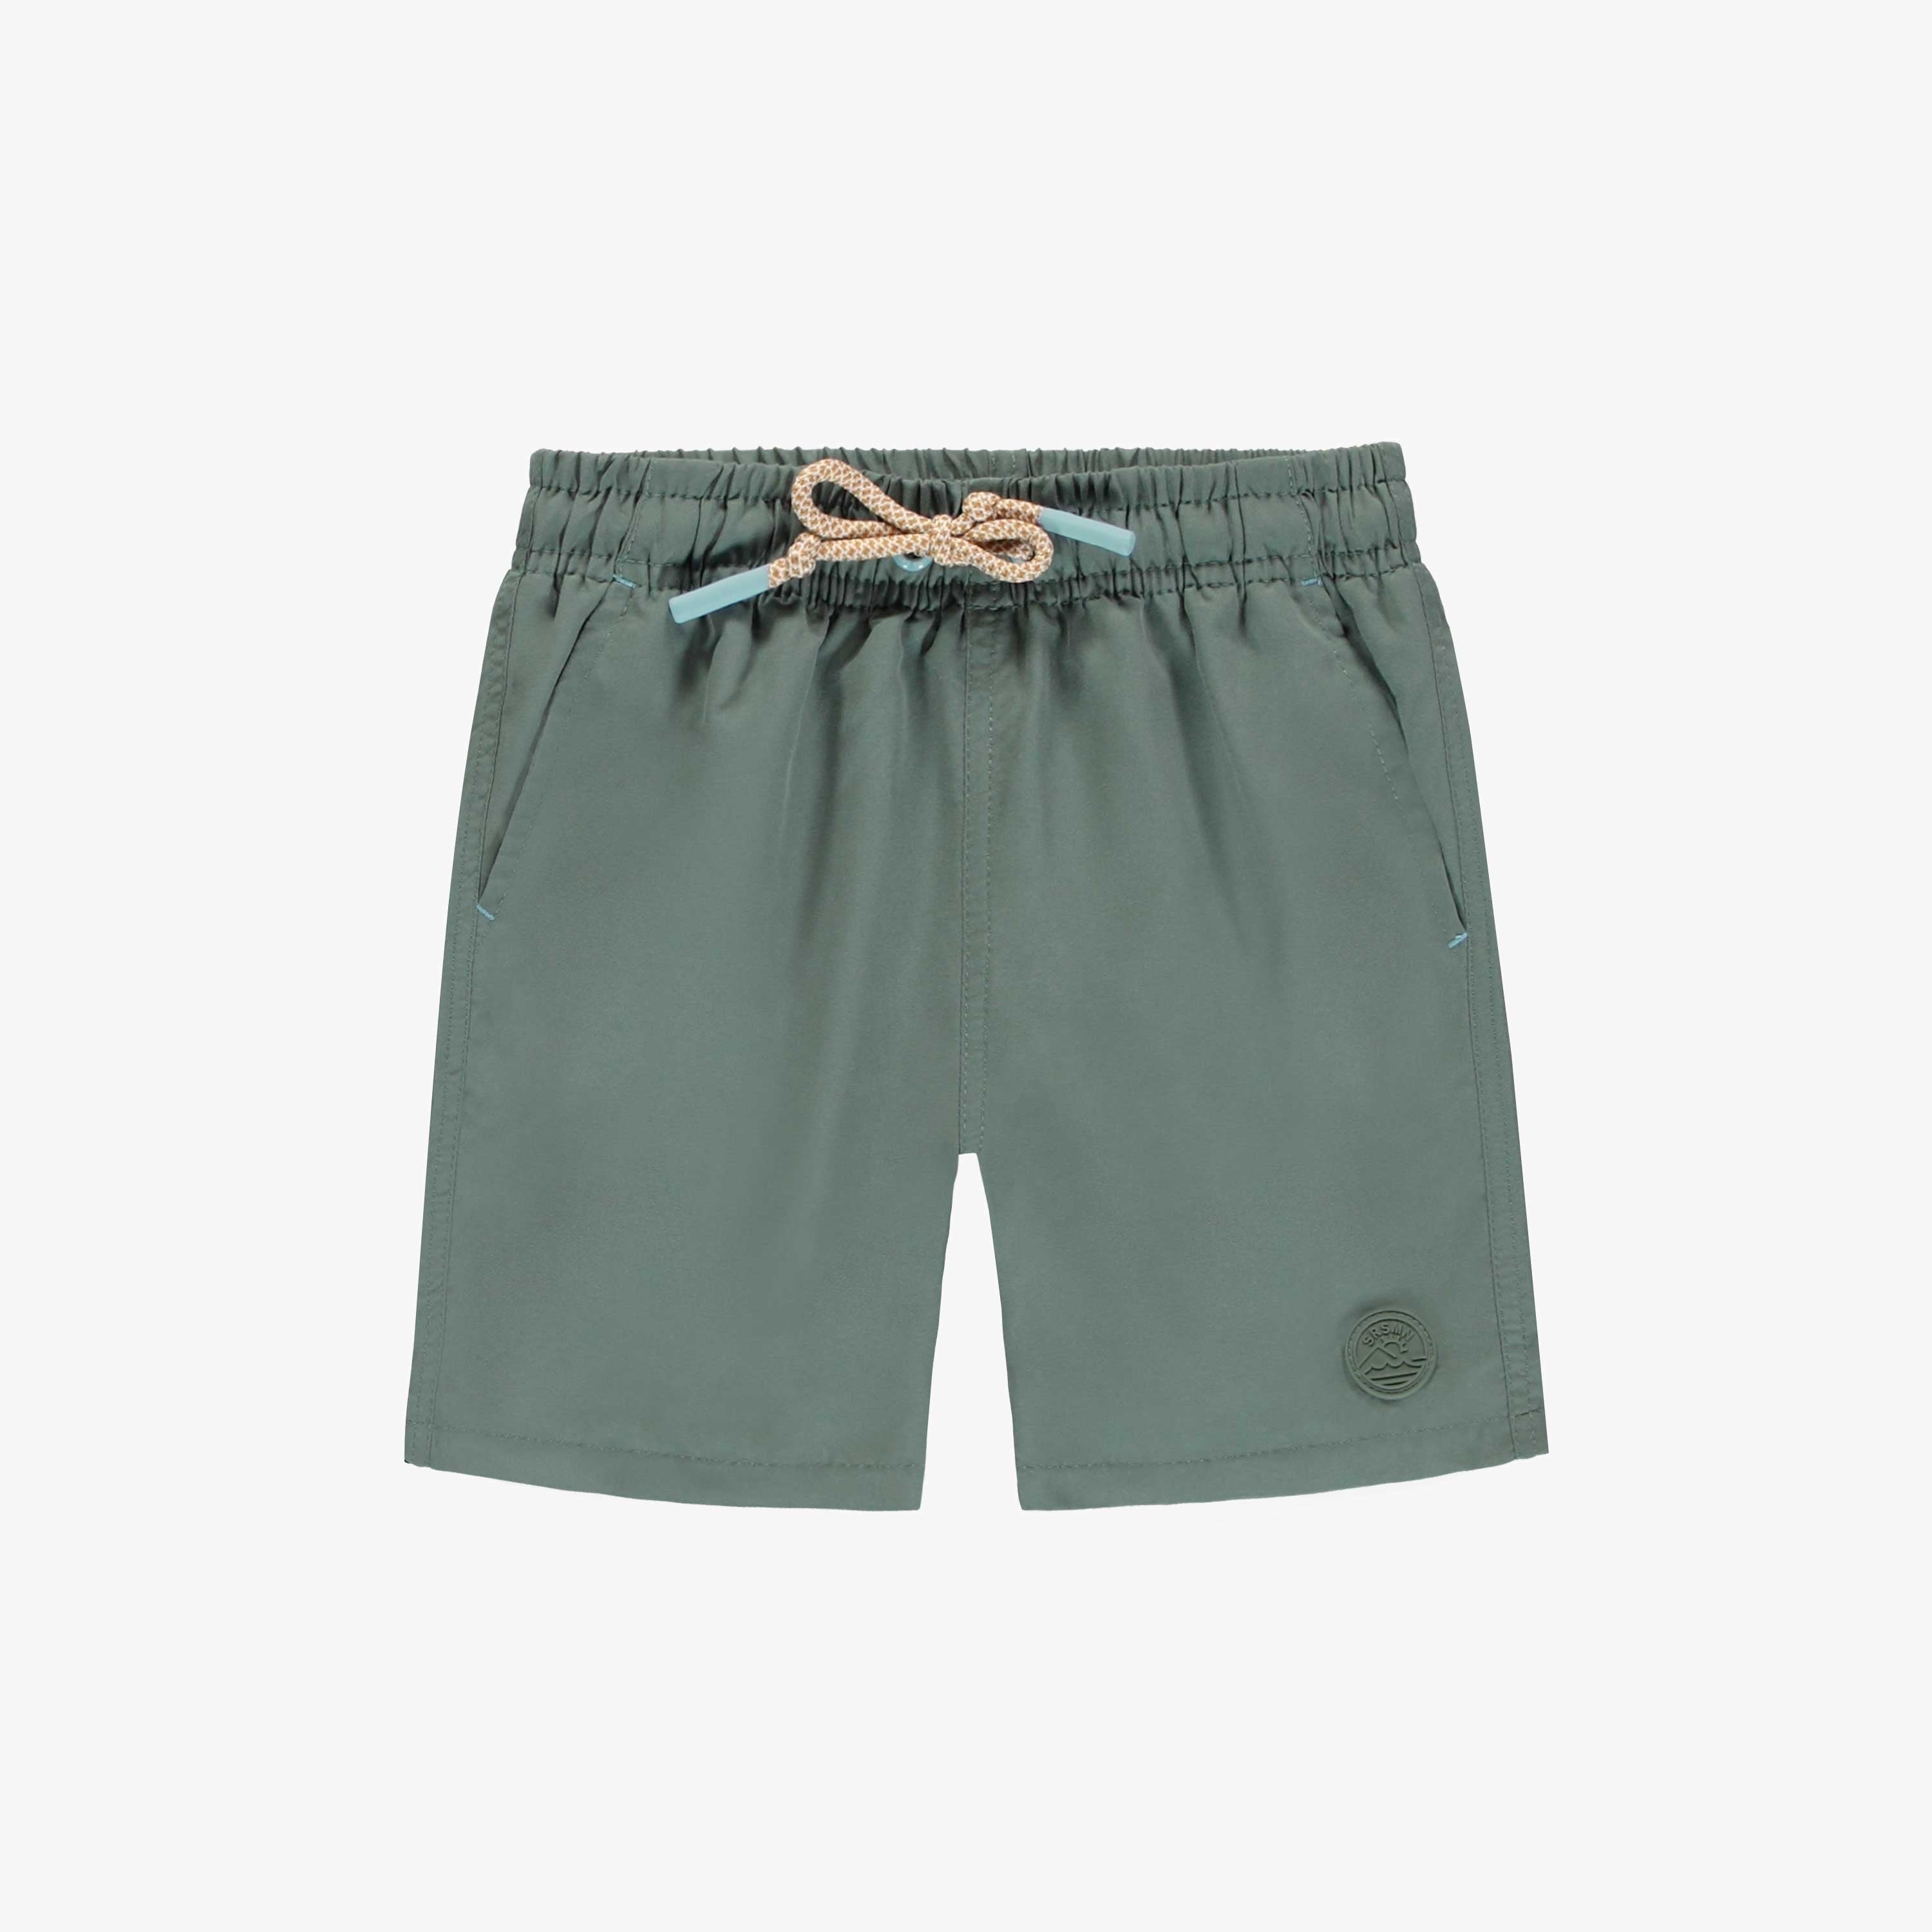 Image of Short de bain sarcelle avec poches en polyester, enfant || Teal swim short with pockets in polyester, child